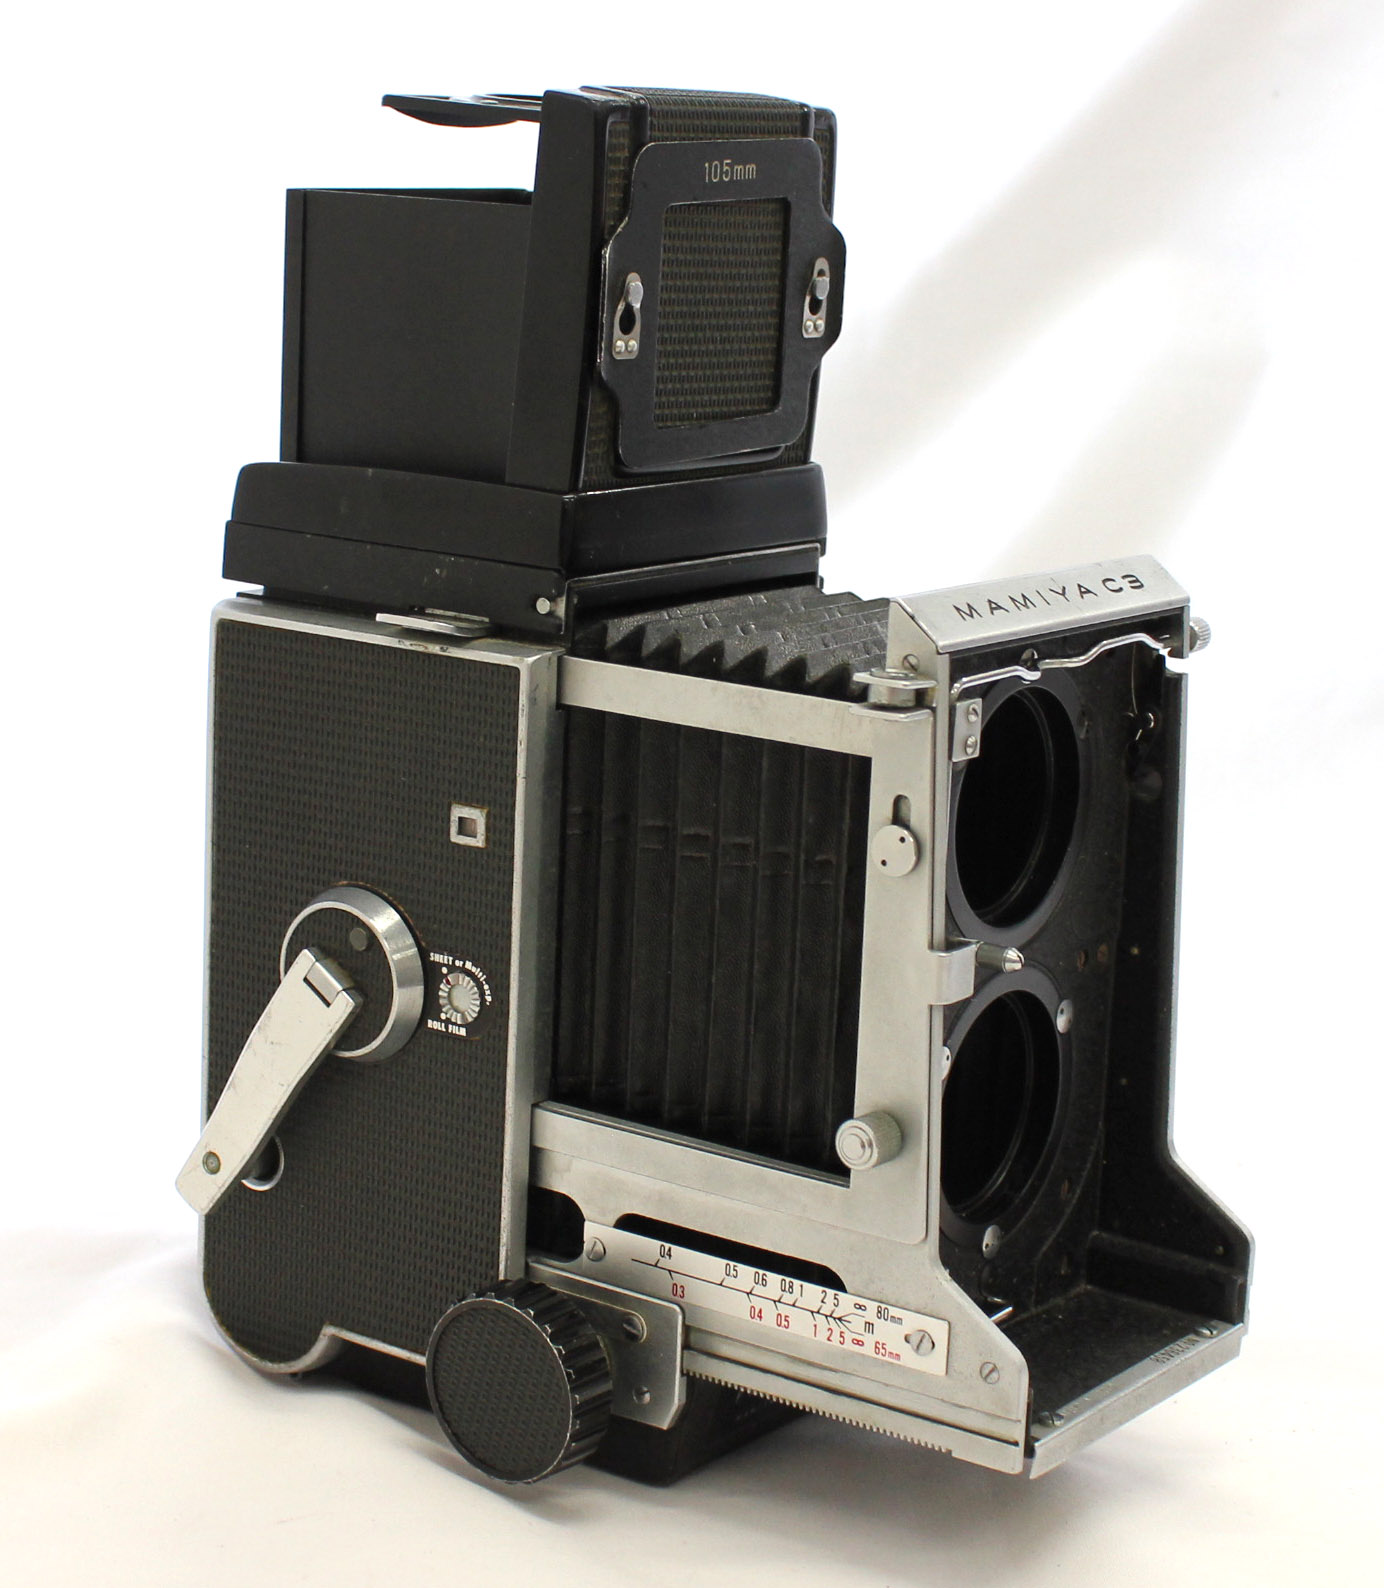  Mamiya C3 Professional Medium Format TLR Camera with 105mm F3.5 Lens from Japan Photo 1